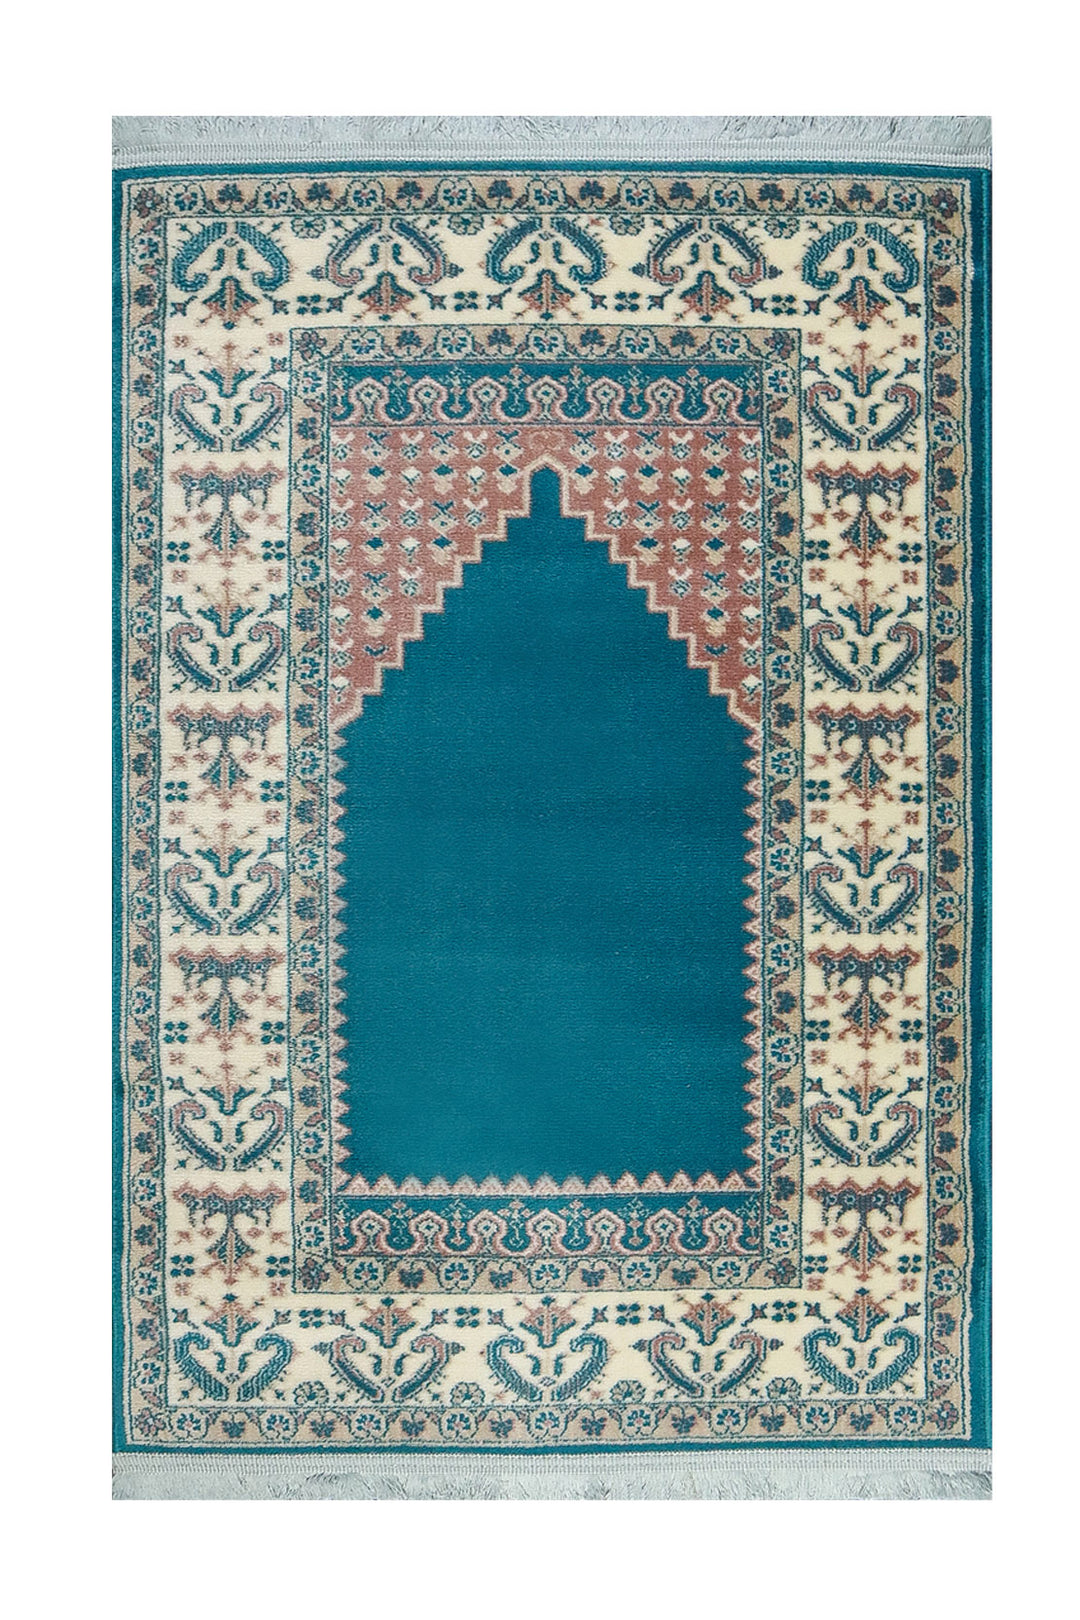 Turkish Style Acrylic Sajjadeh Prayers Mat - Aqua - Soft, Durable, and Easy to Clean